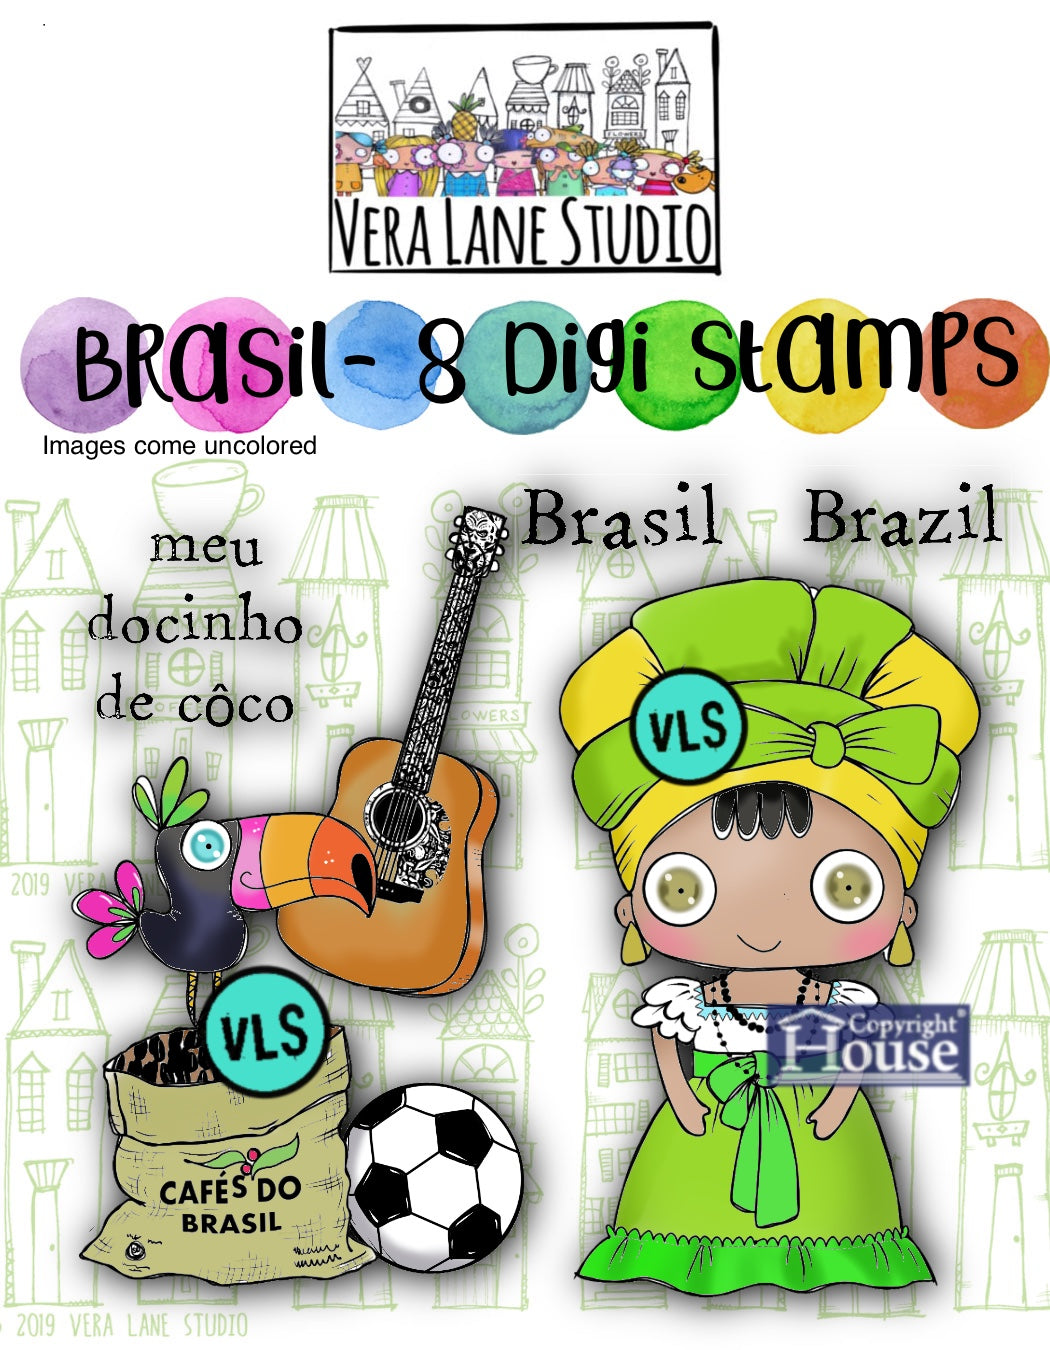 Brasil - 8 Digi stamp set and JPG and PNG files